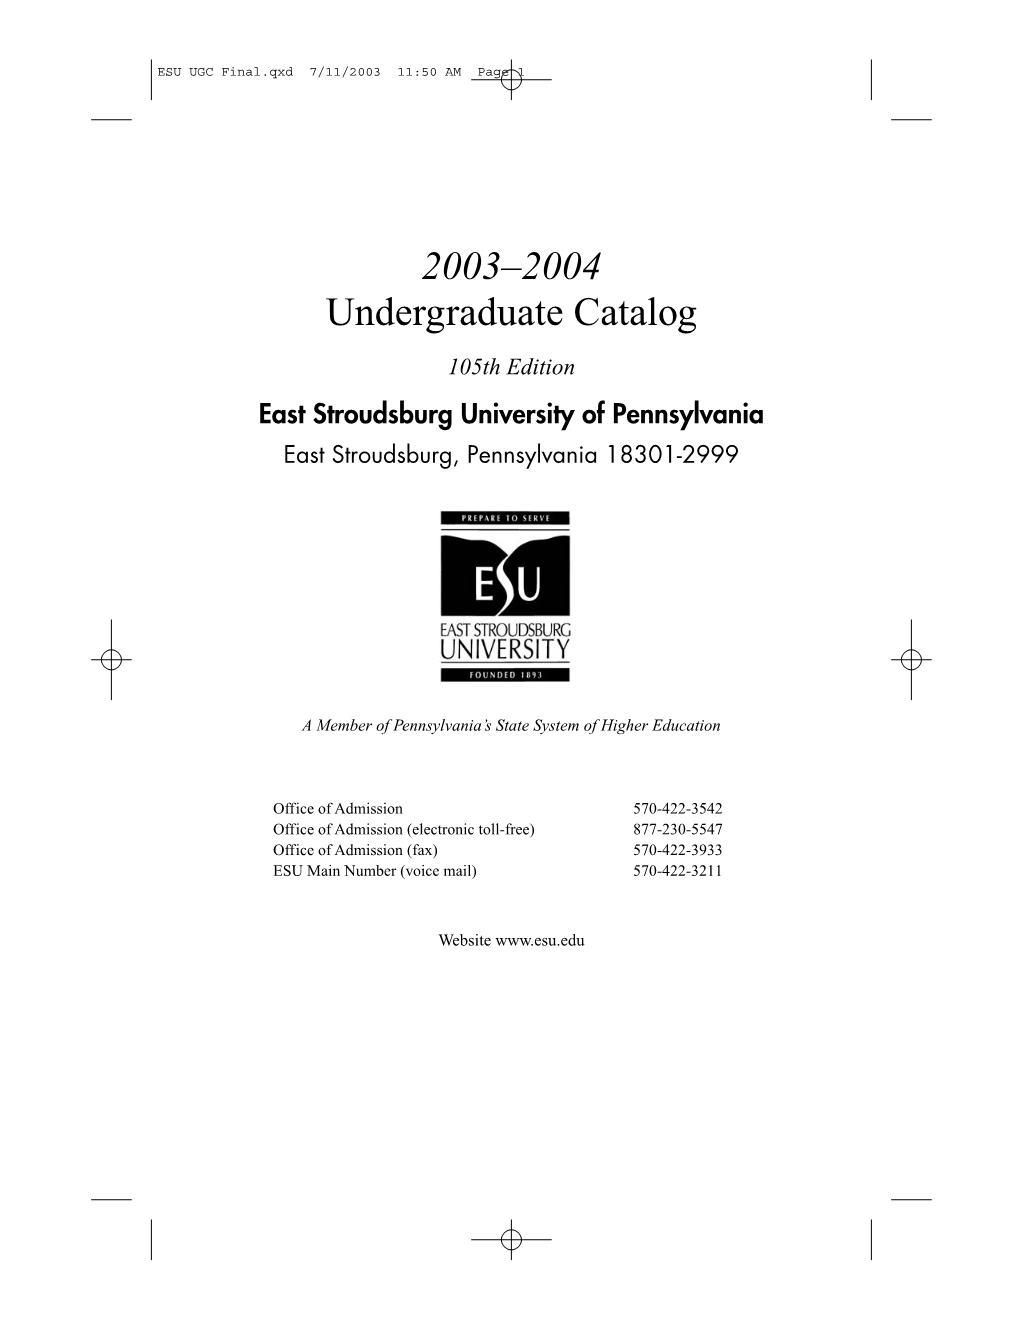 ESU UGC Final.Qxd 7/11/2003 11:50 AM Page 1